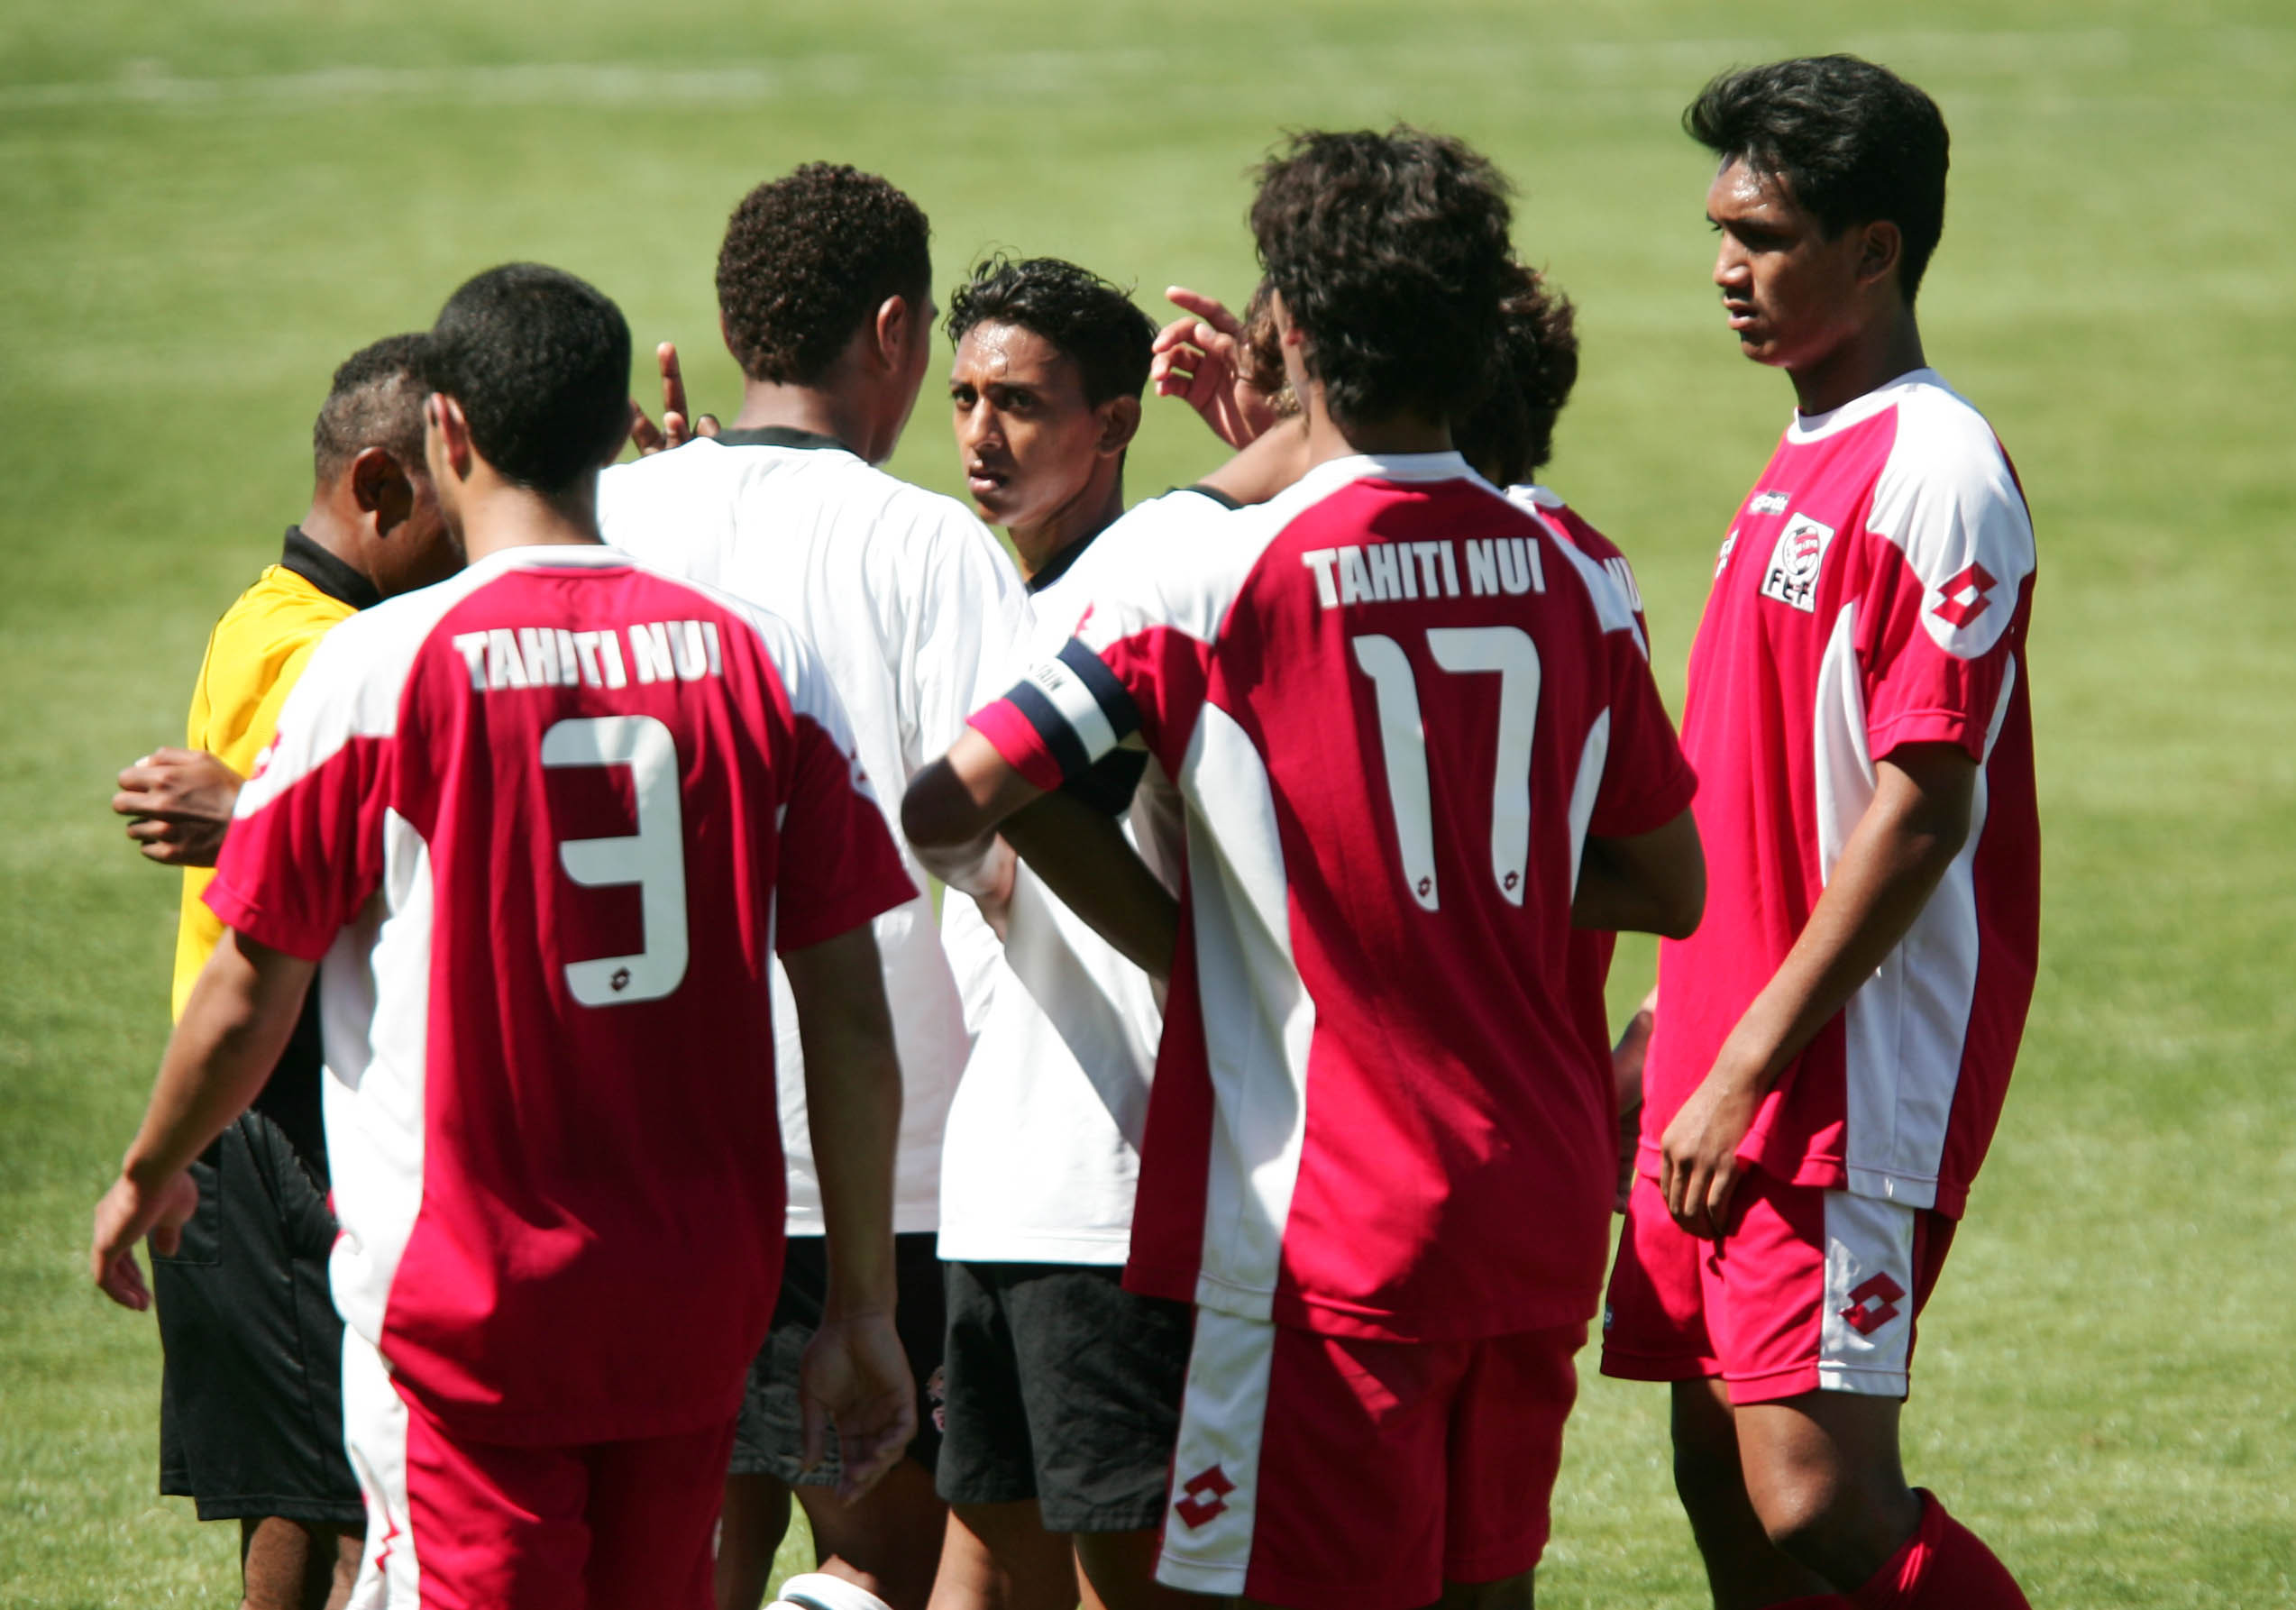 Football: Tahiti win 30-0 at Pacific Games - NZ Herald